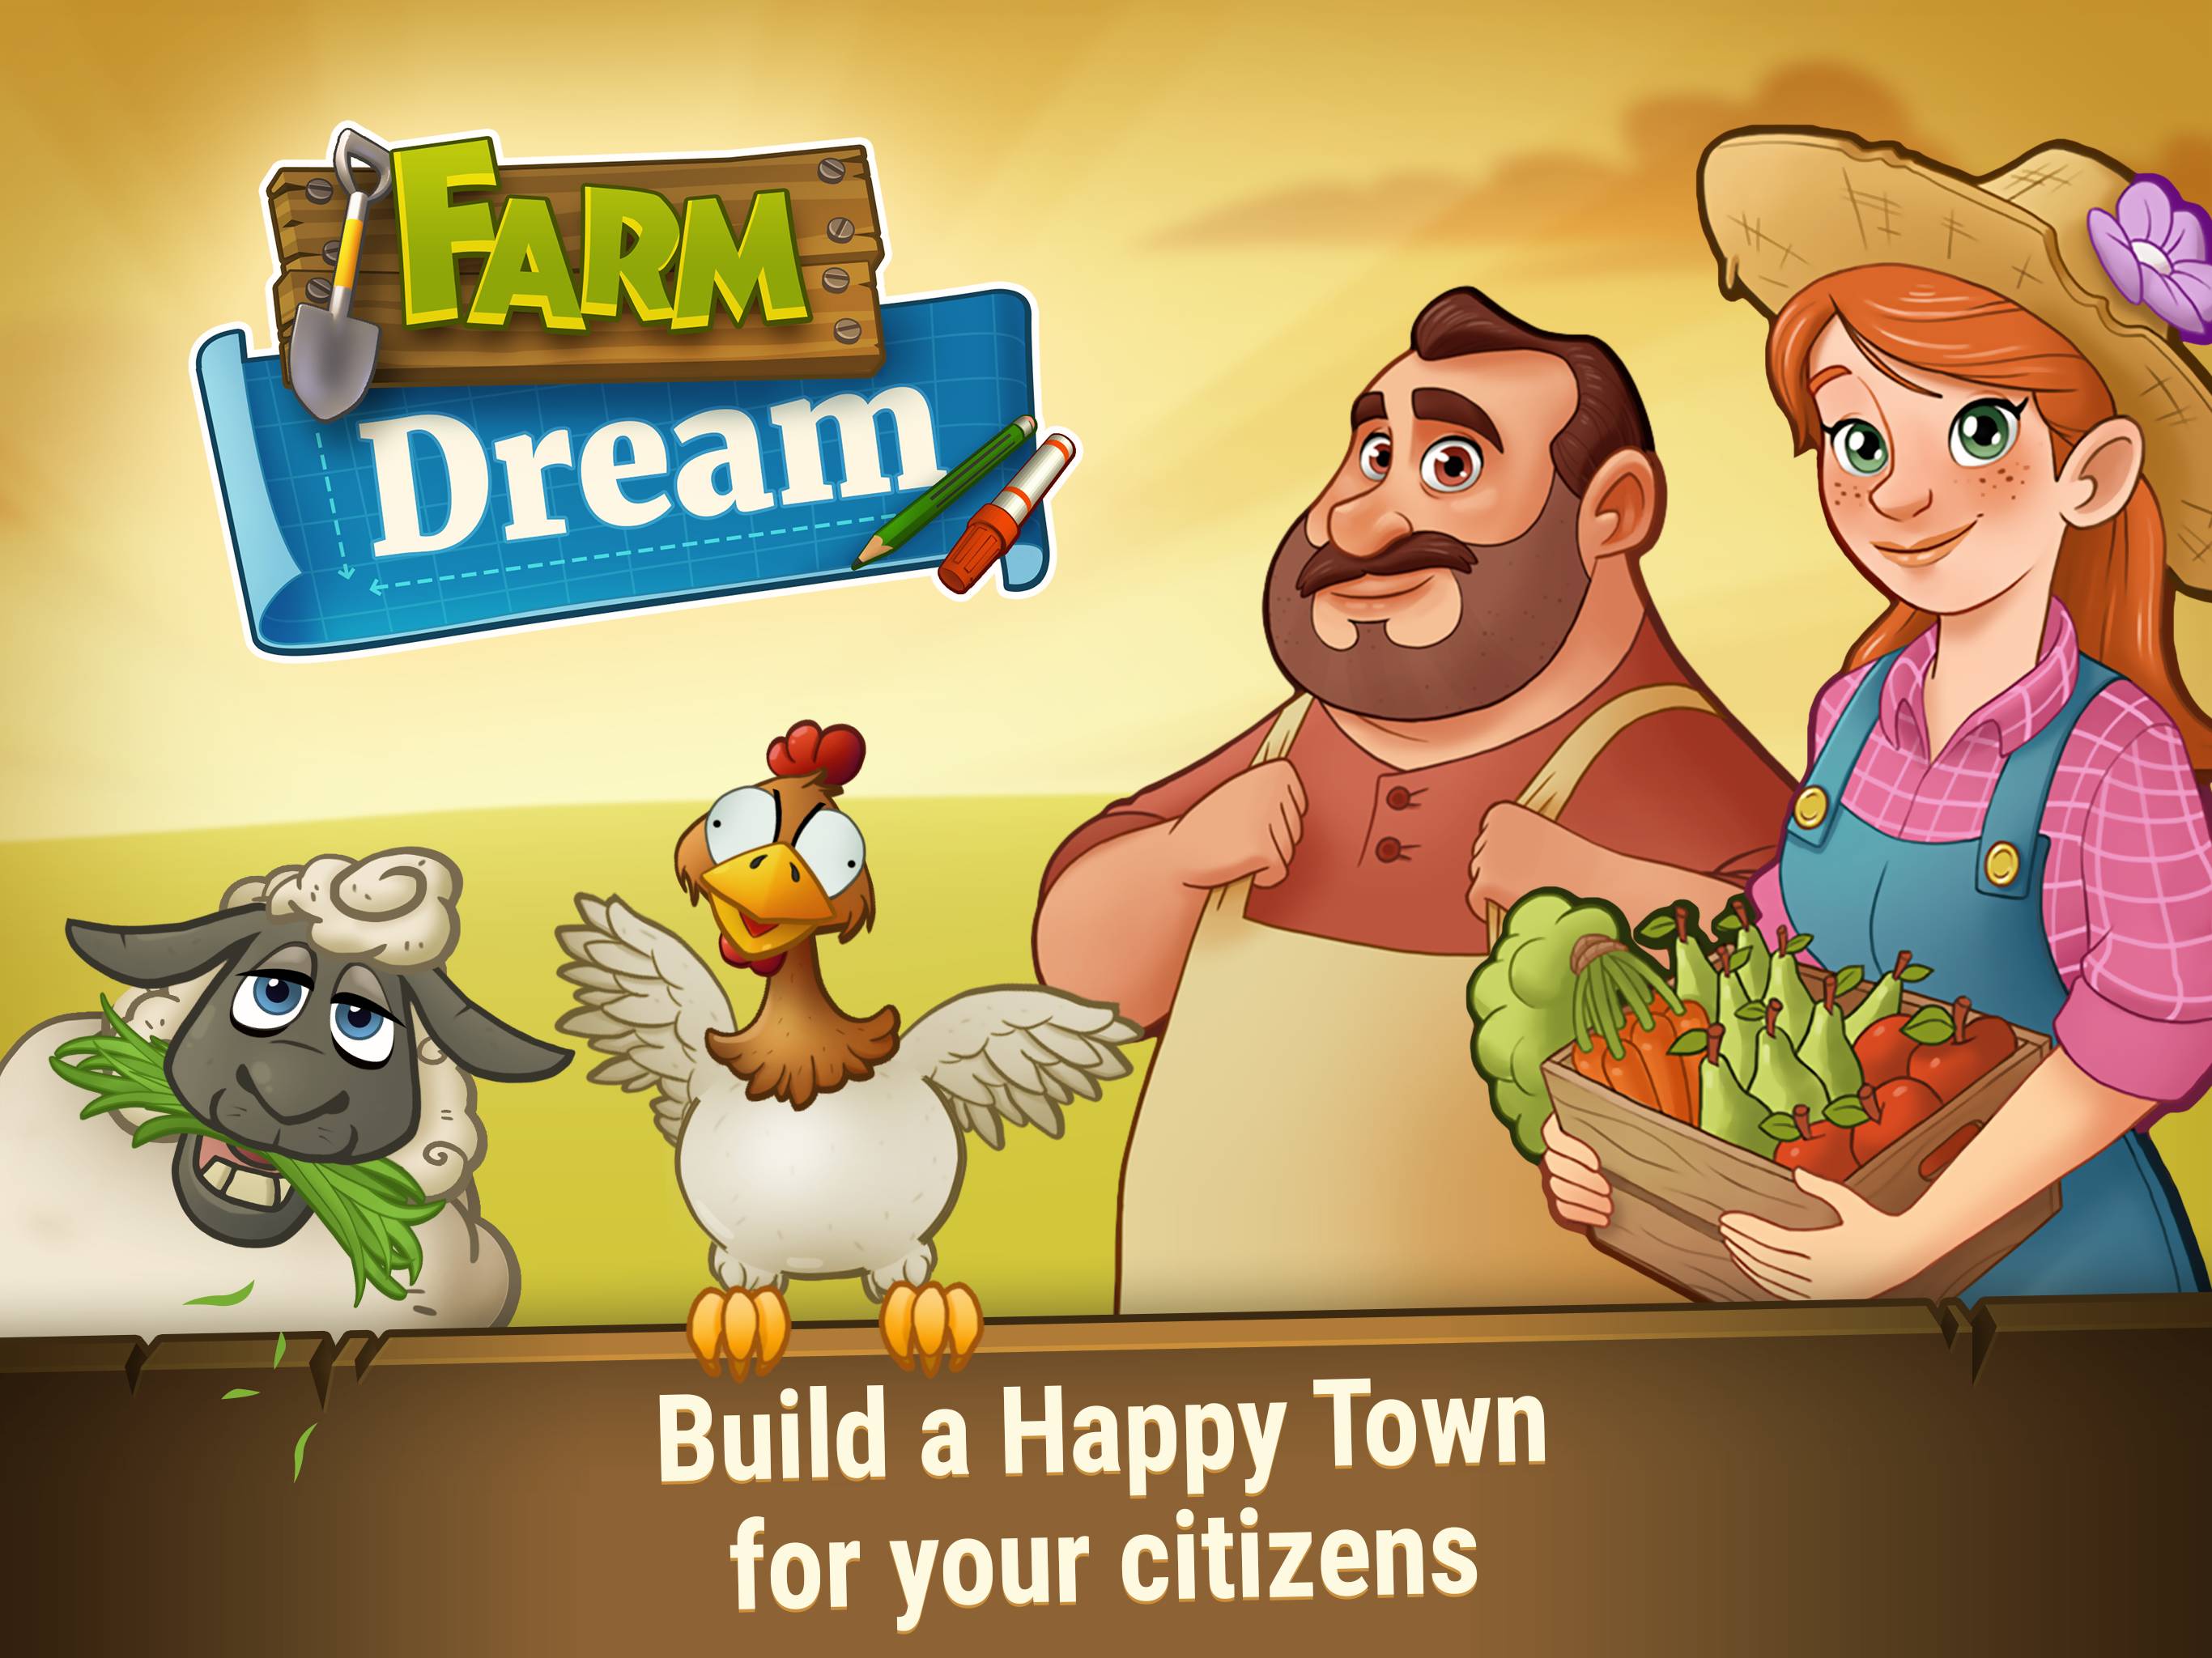 Farm Dream: Harvest your Town on Farming Day